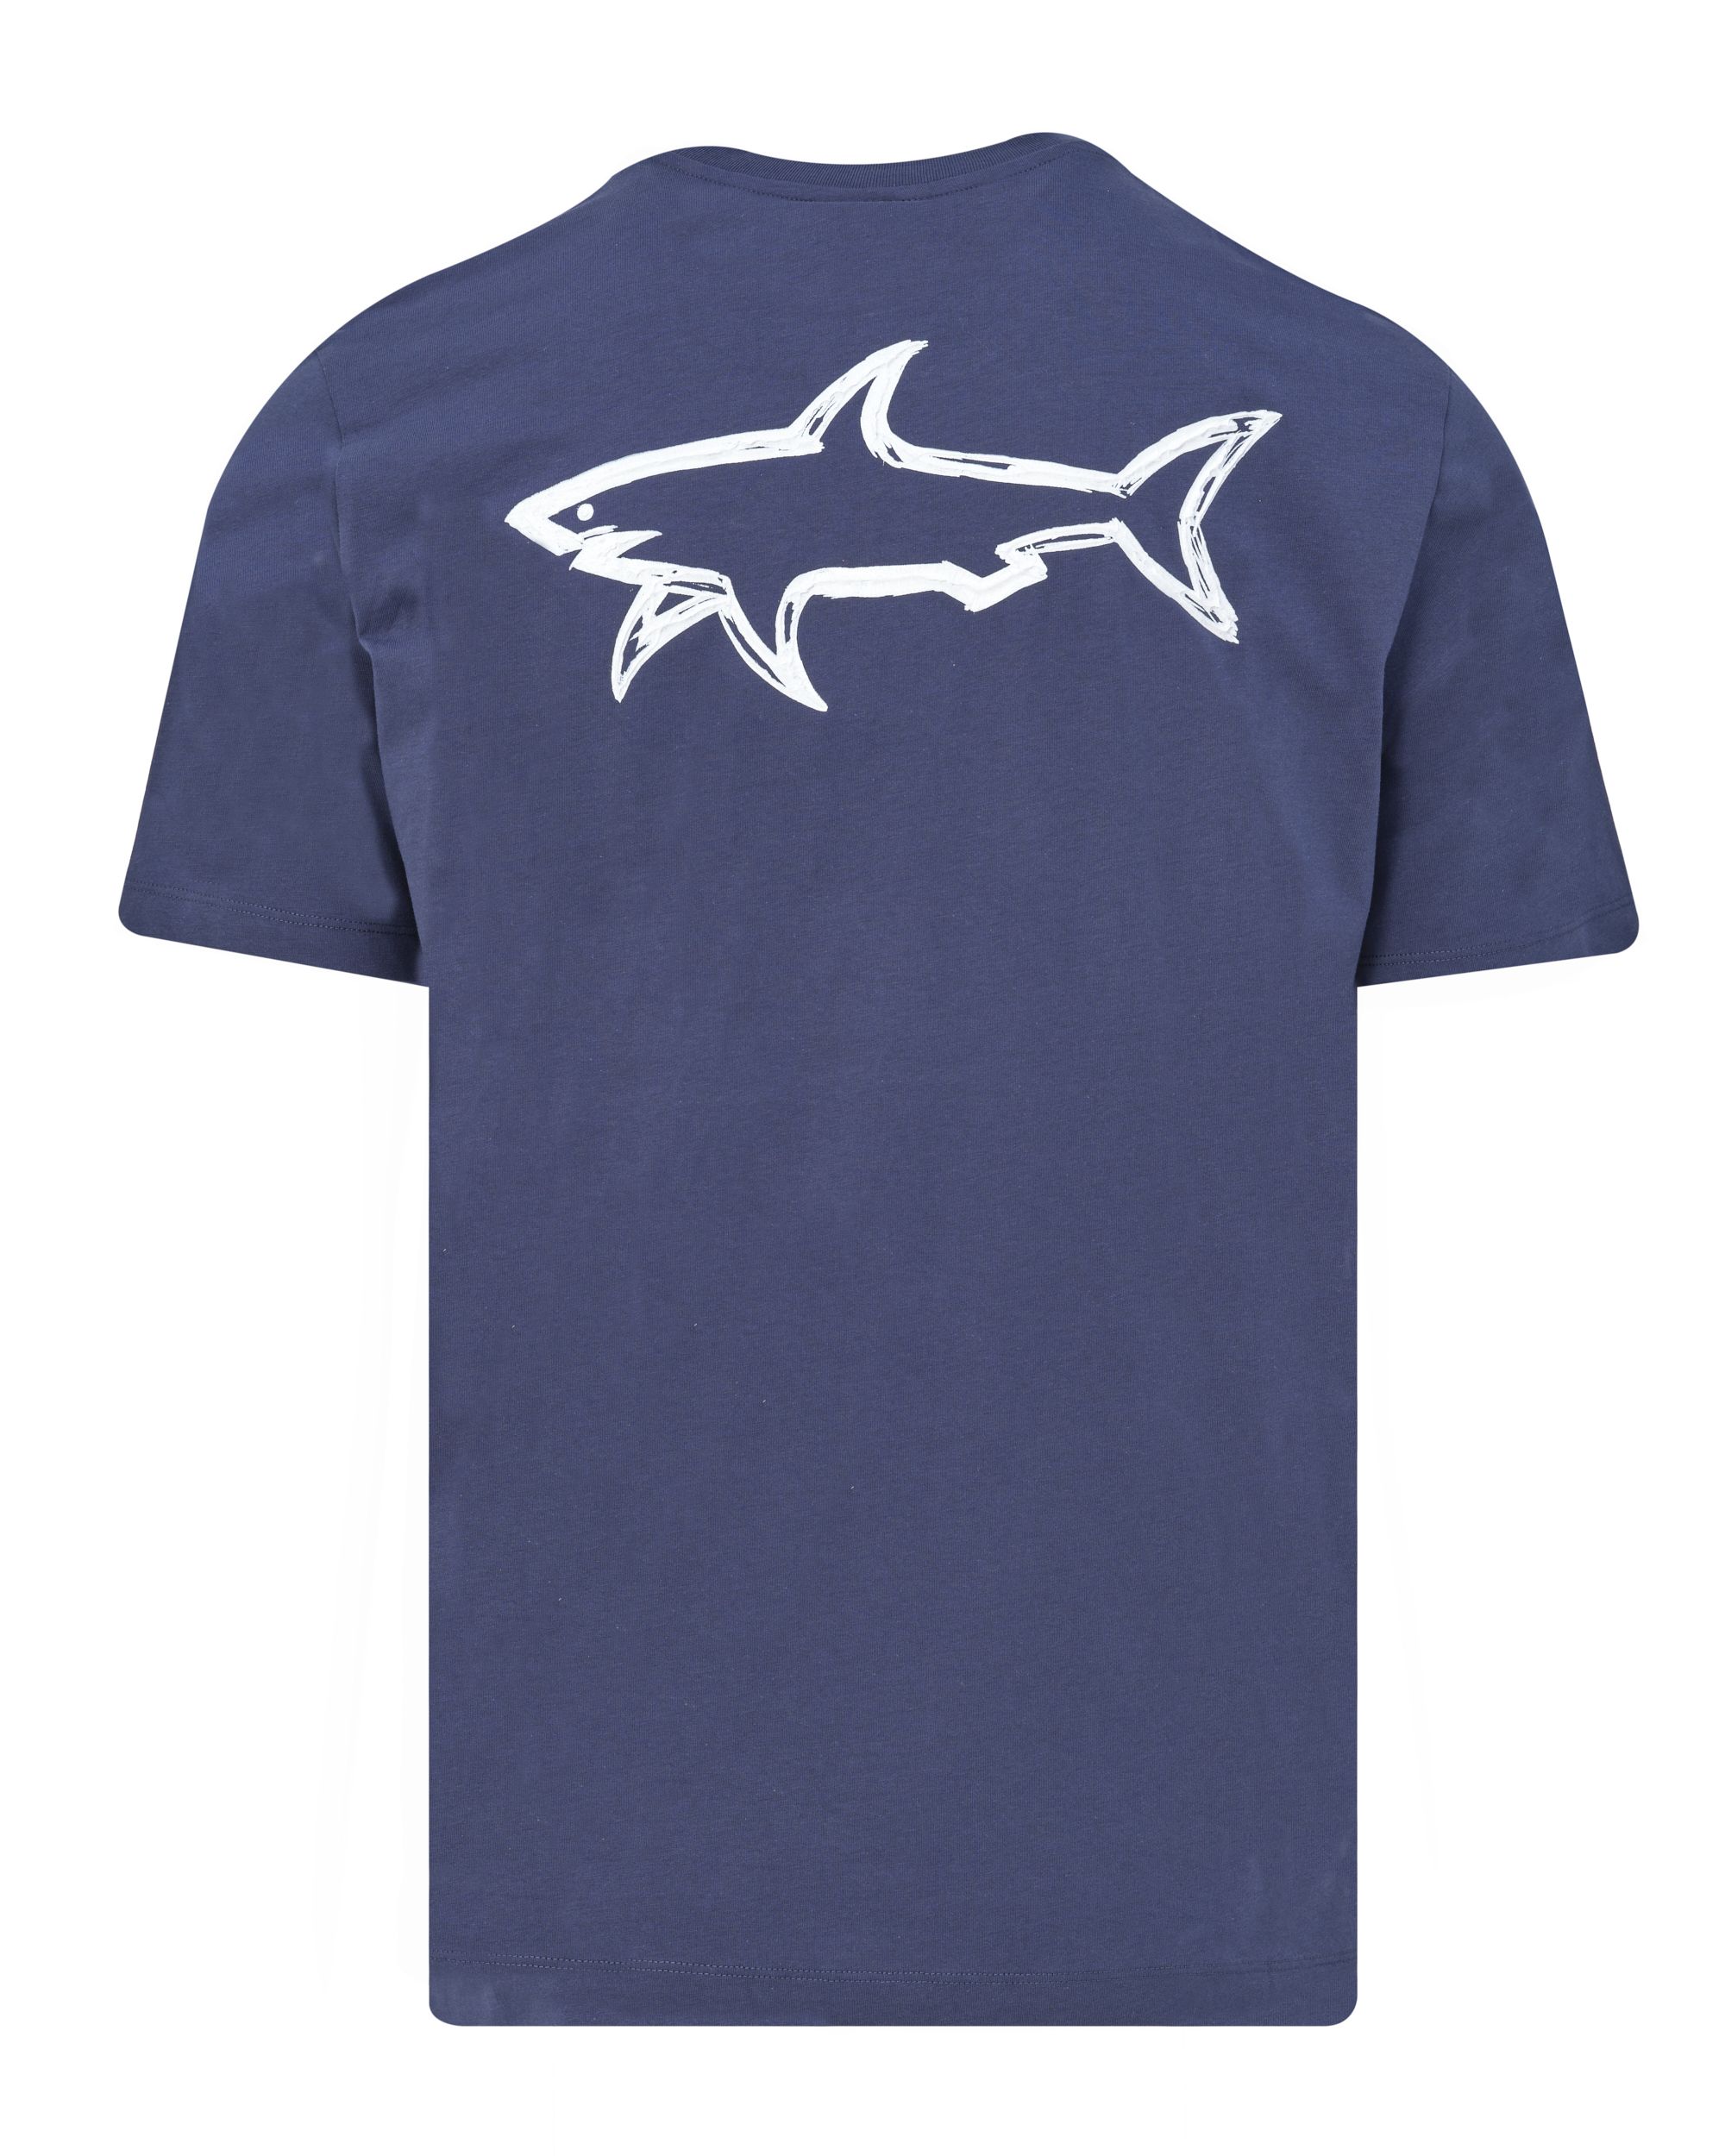 Paul & Shark T-shirt KM Donker blauw 083345-001-L